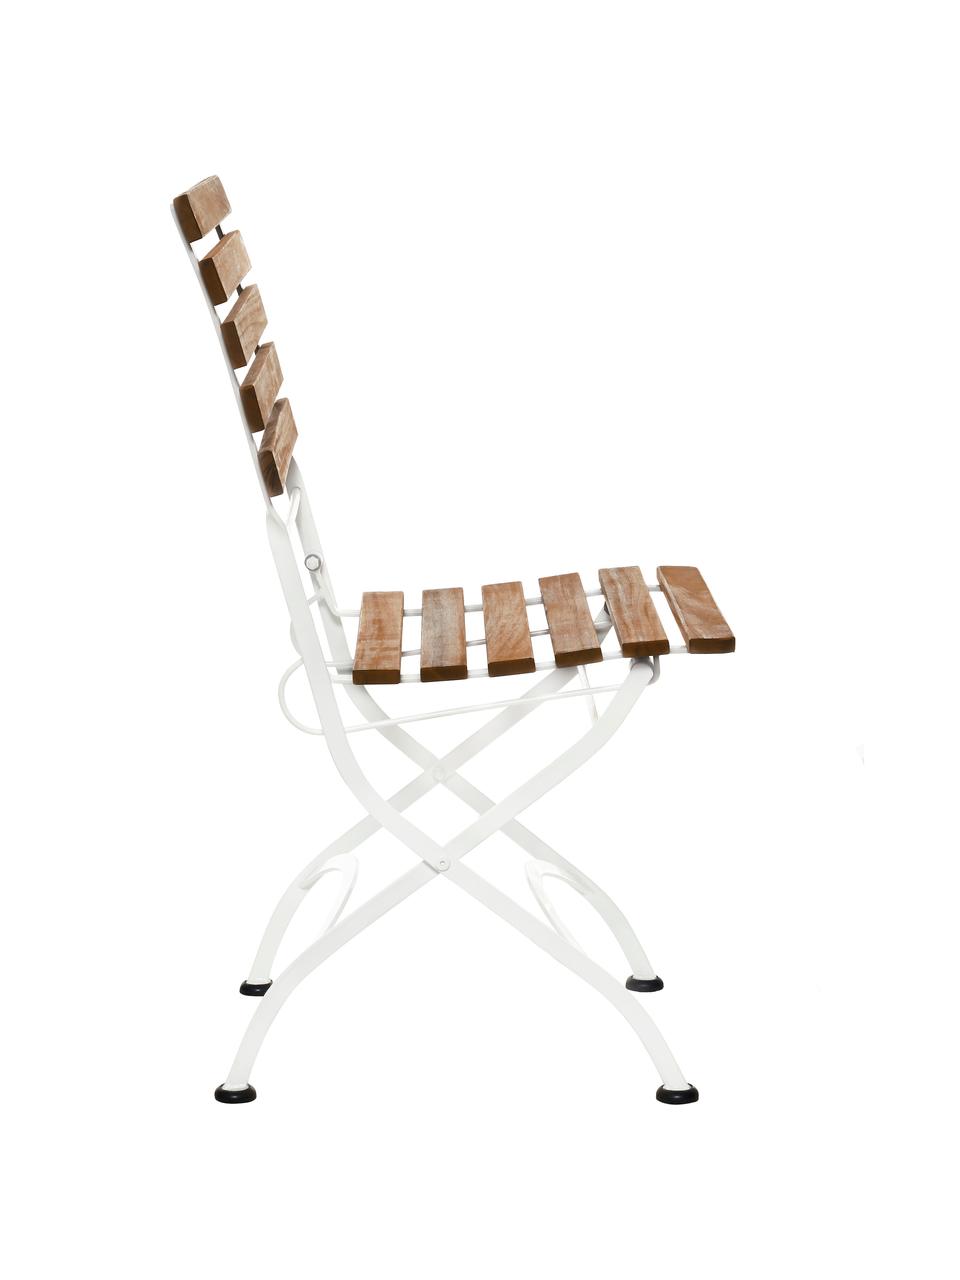 Garten-Klappstühle Parklife, 2 Stück, Sitzfläche: Akazienholz, geölt, Gestell: Metall, verzinkt, pulverb, Weiß, Akazienholz, B 47 x T 59 cm